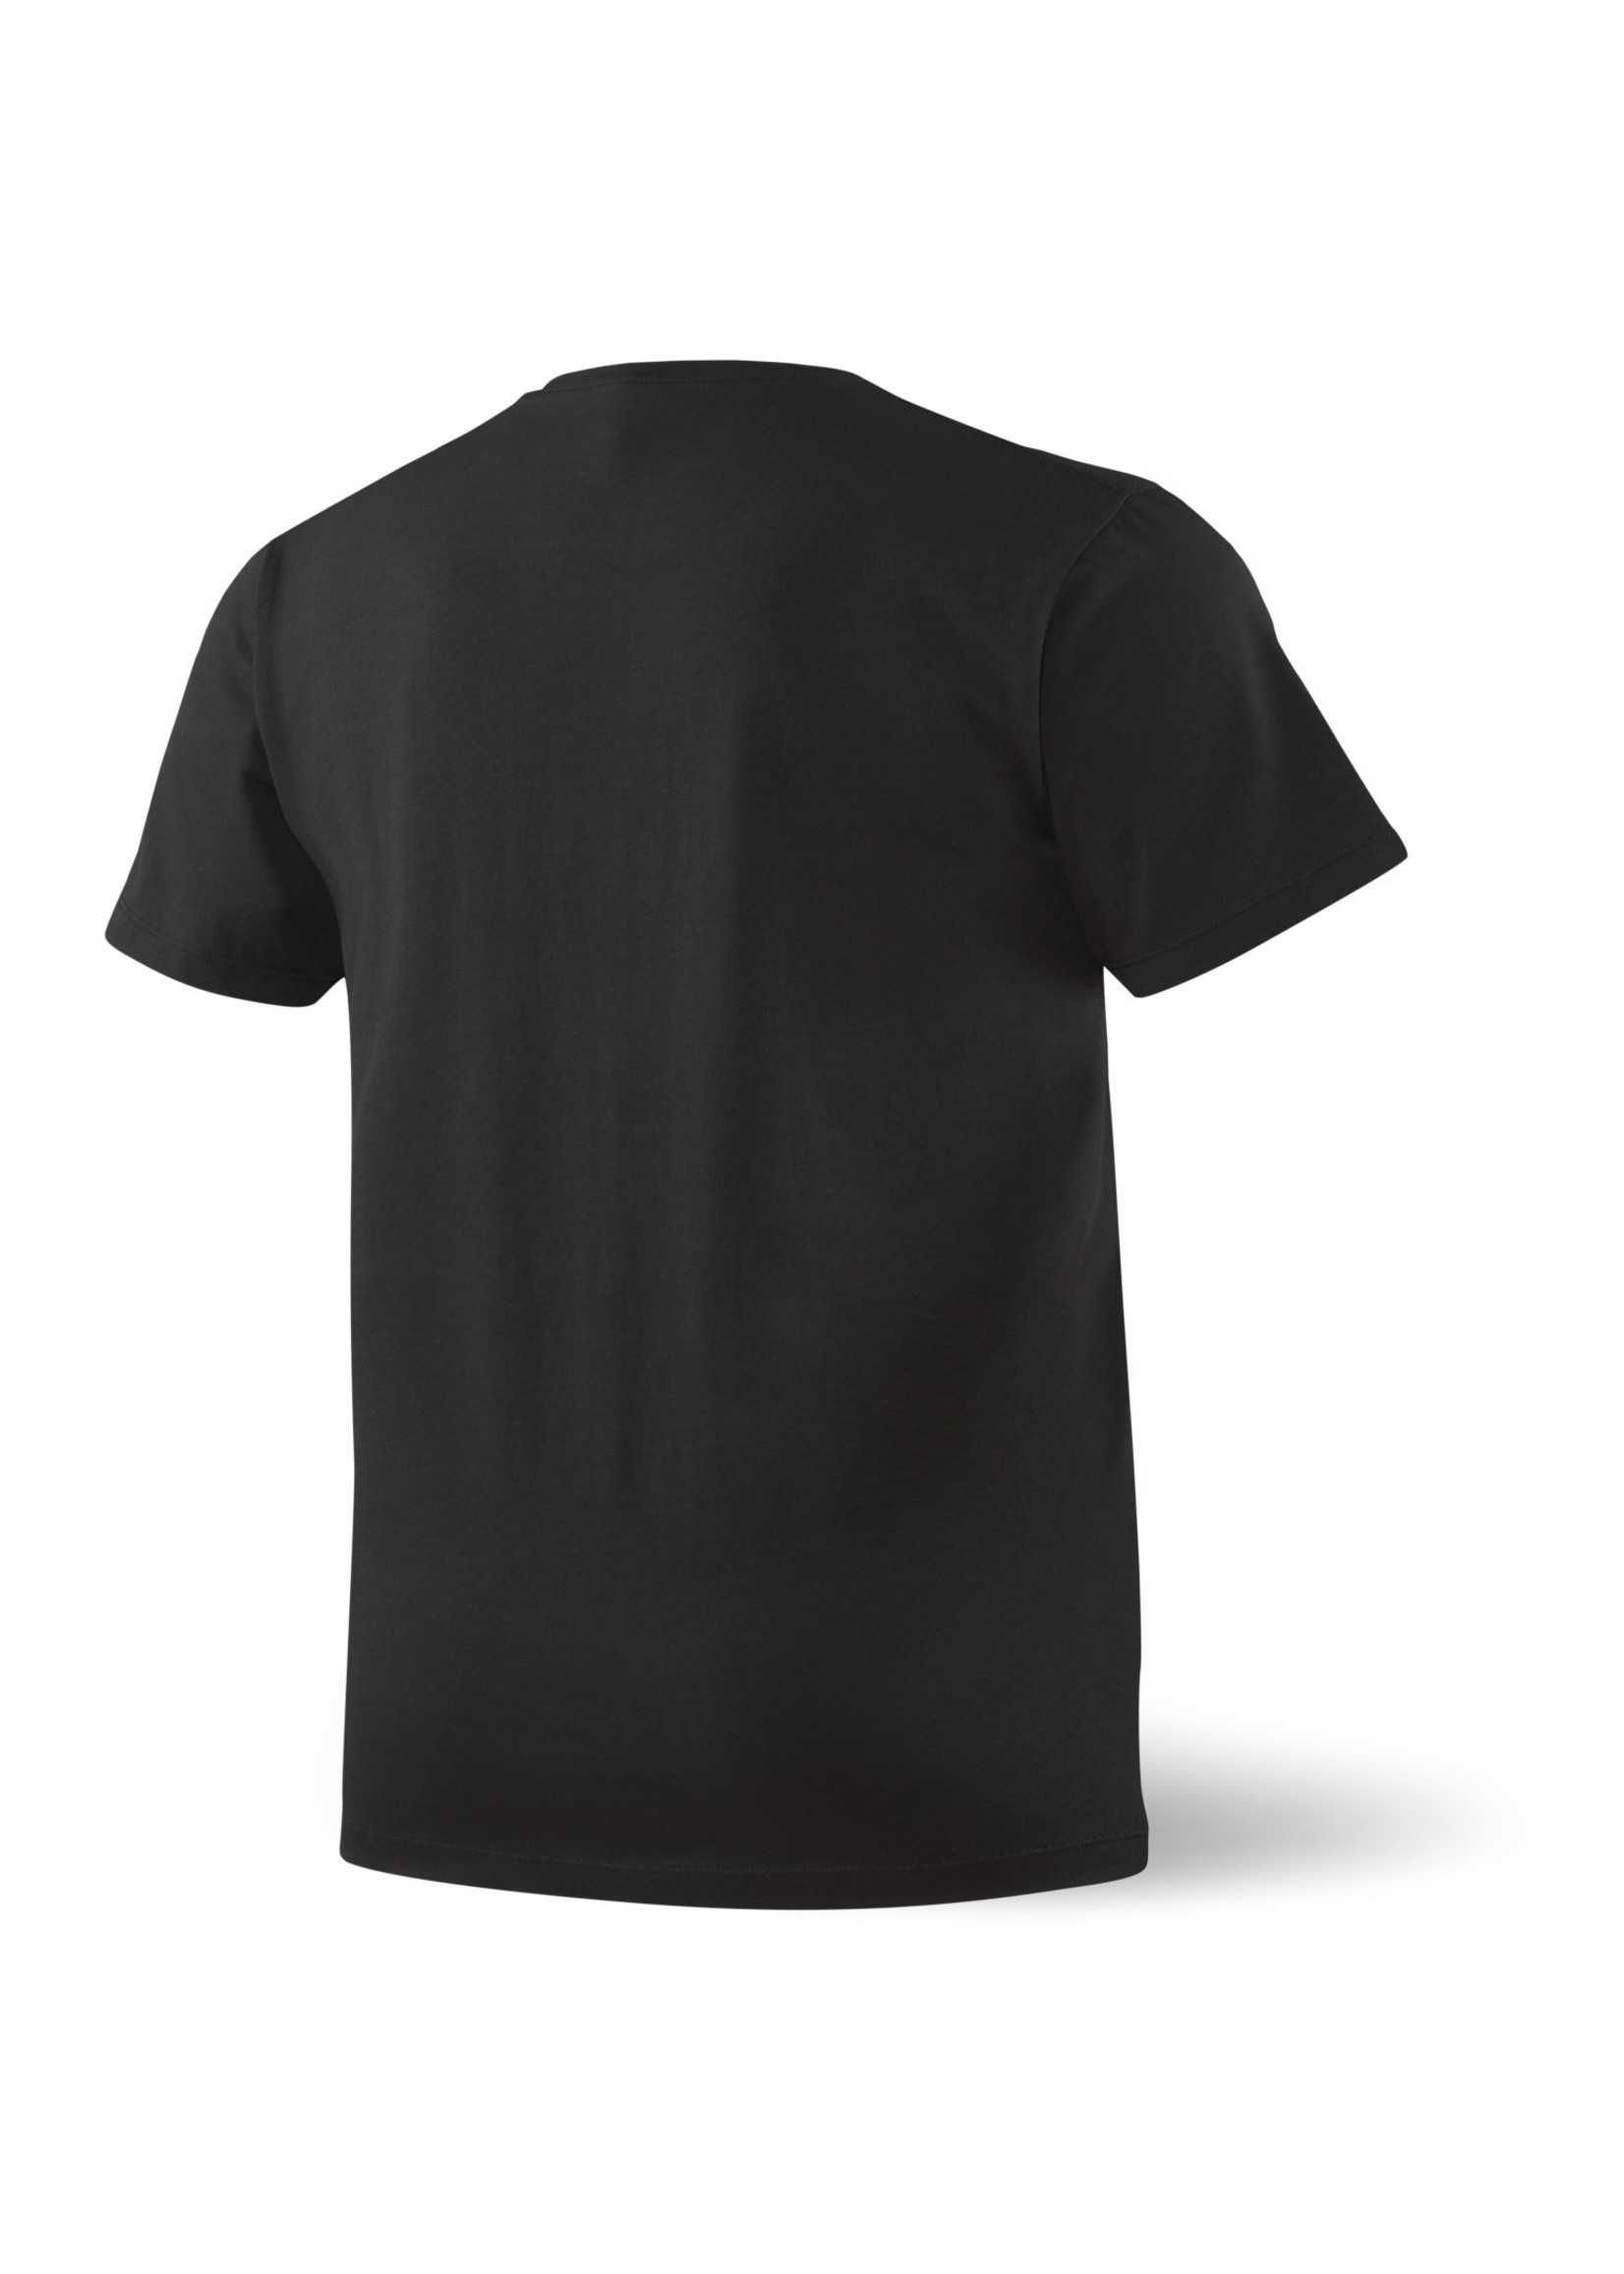 SAXX SAXX's Short Sleeve V-Neck Undershirt